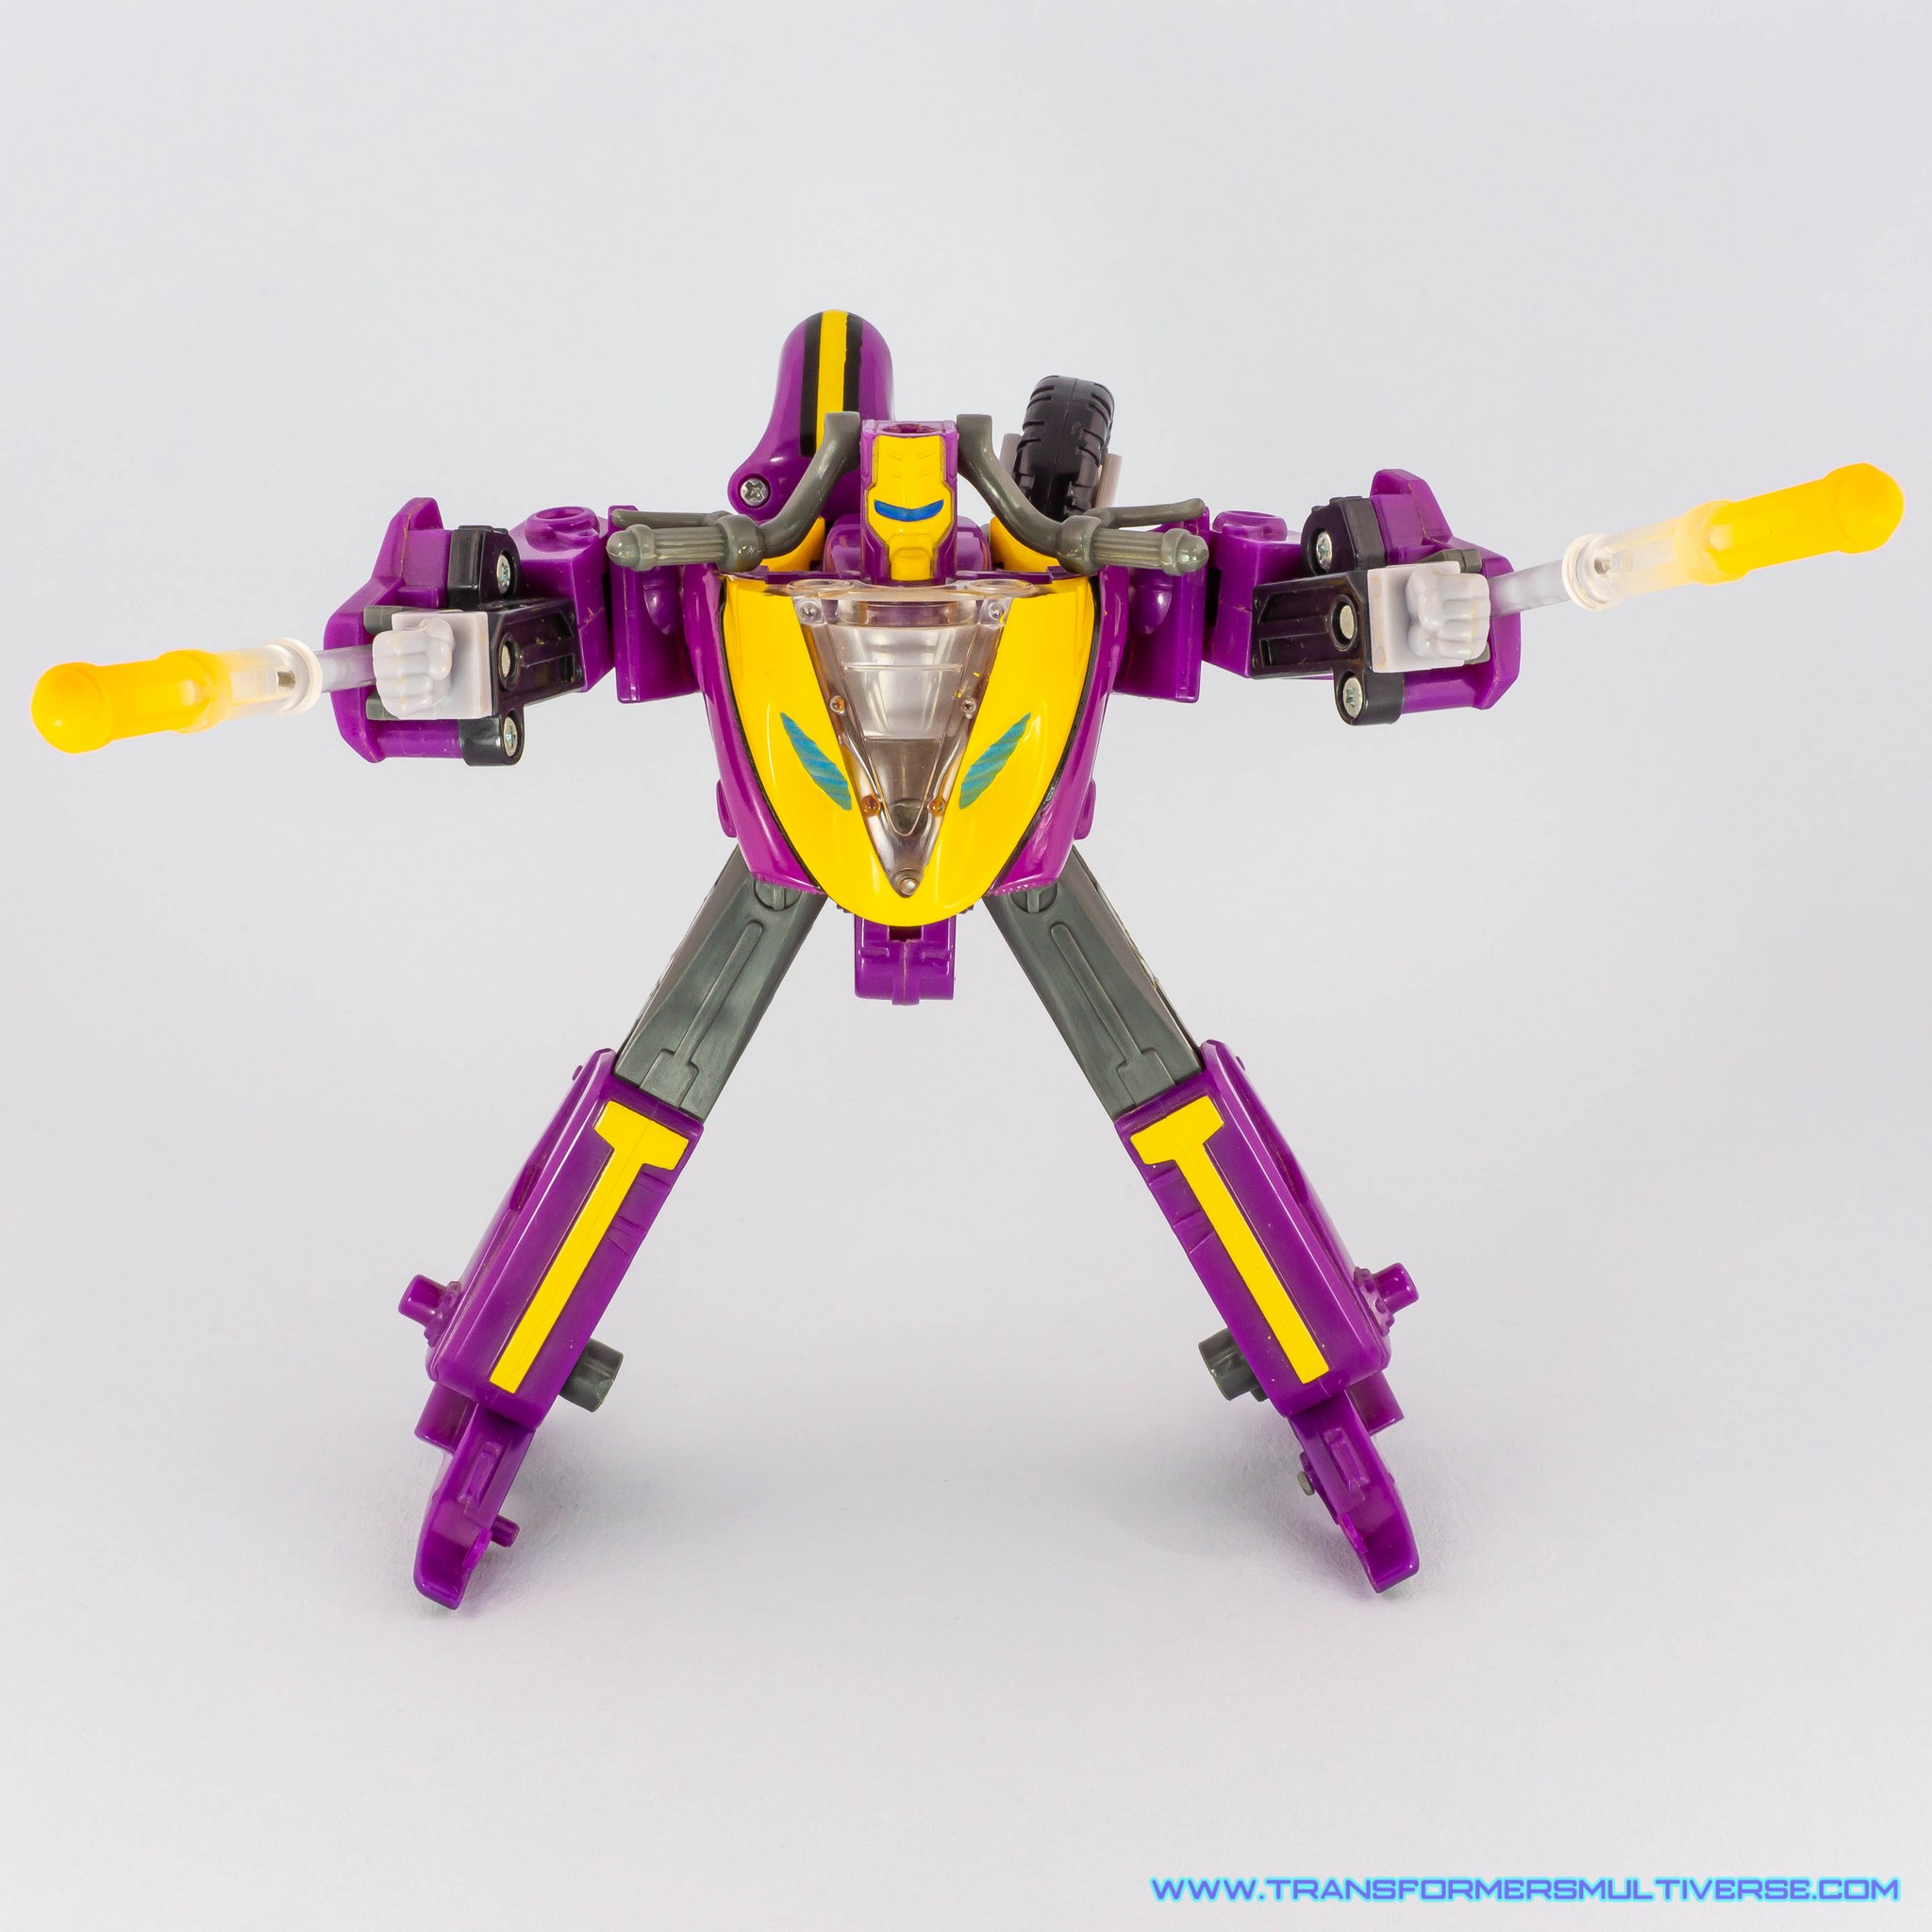 Transformers Armada Sideways robot mode without Headmasters